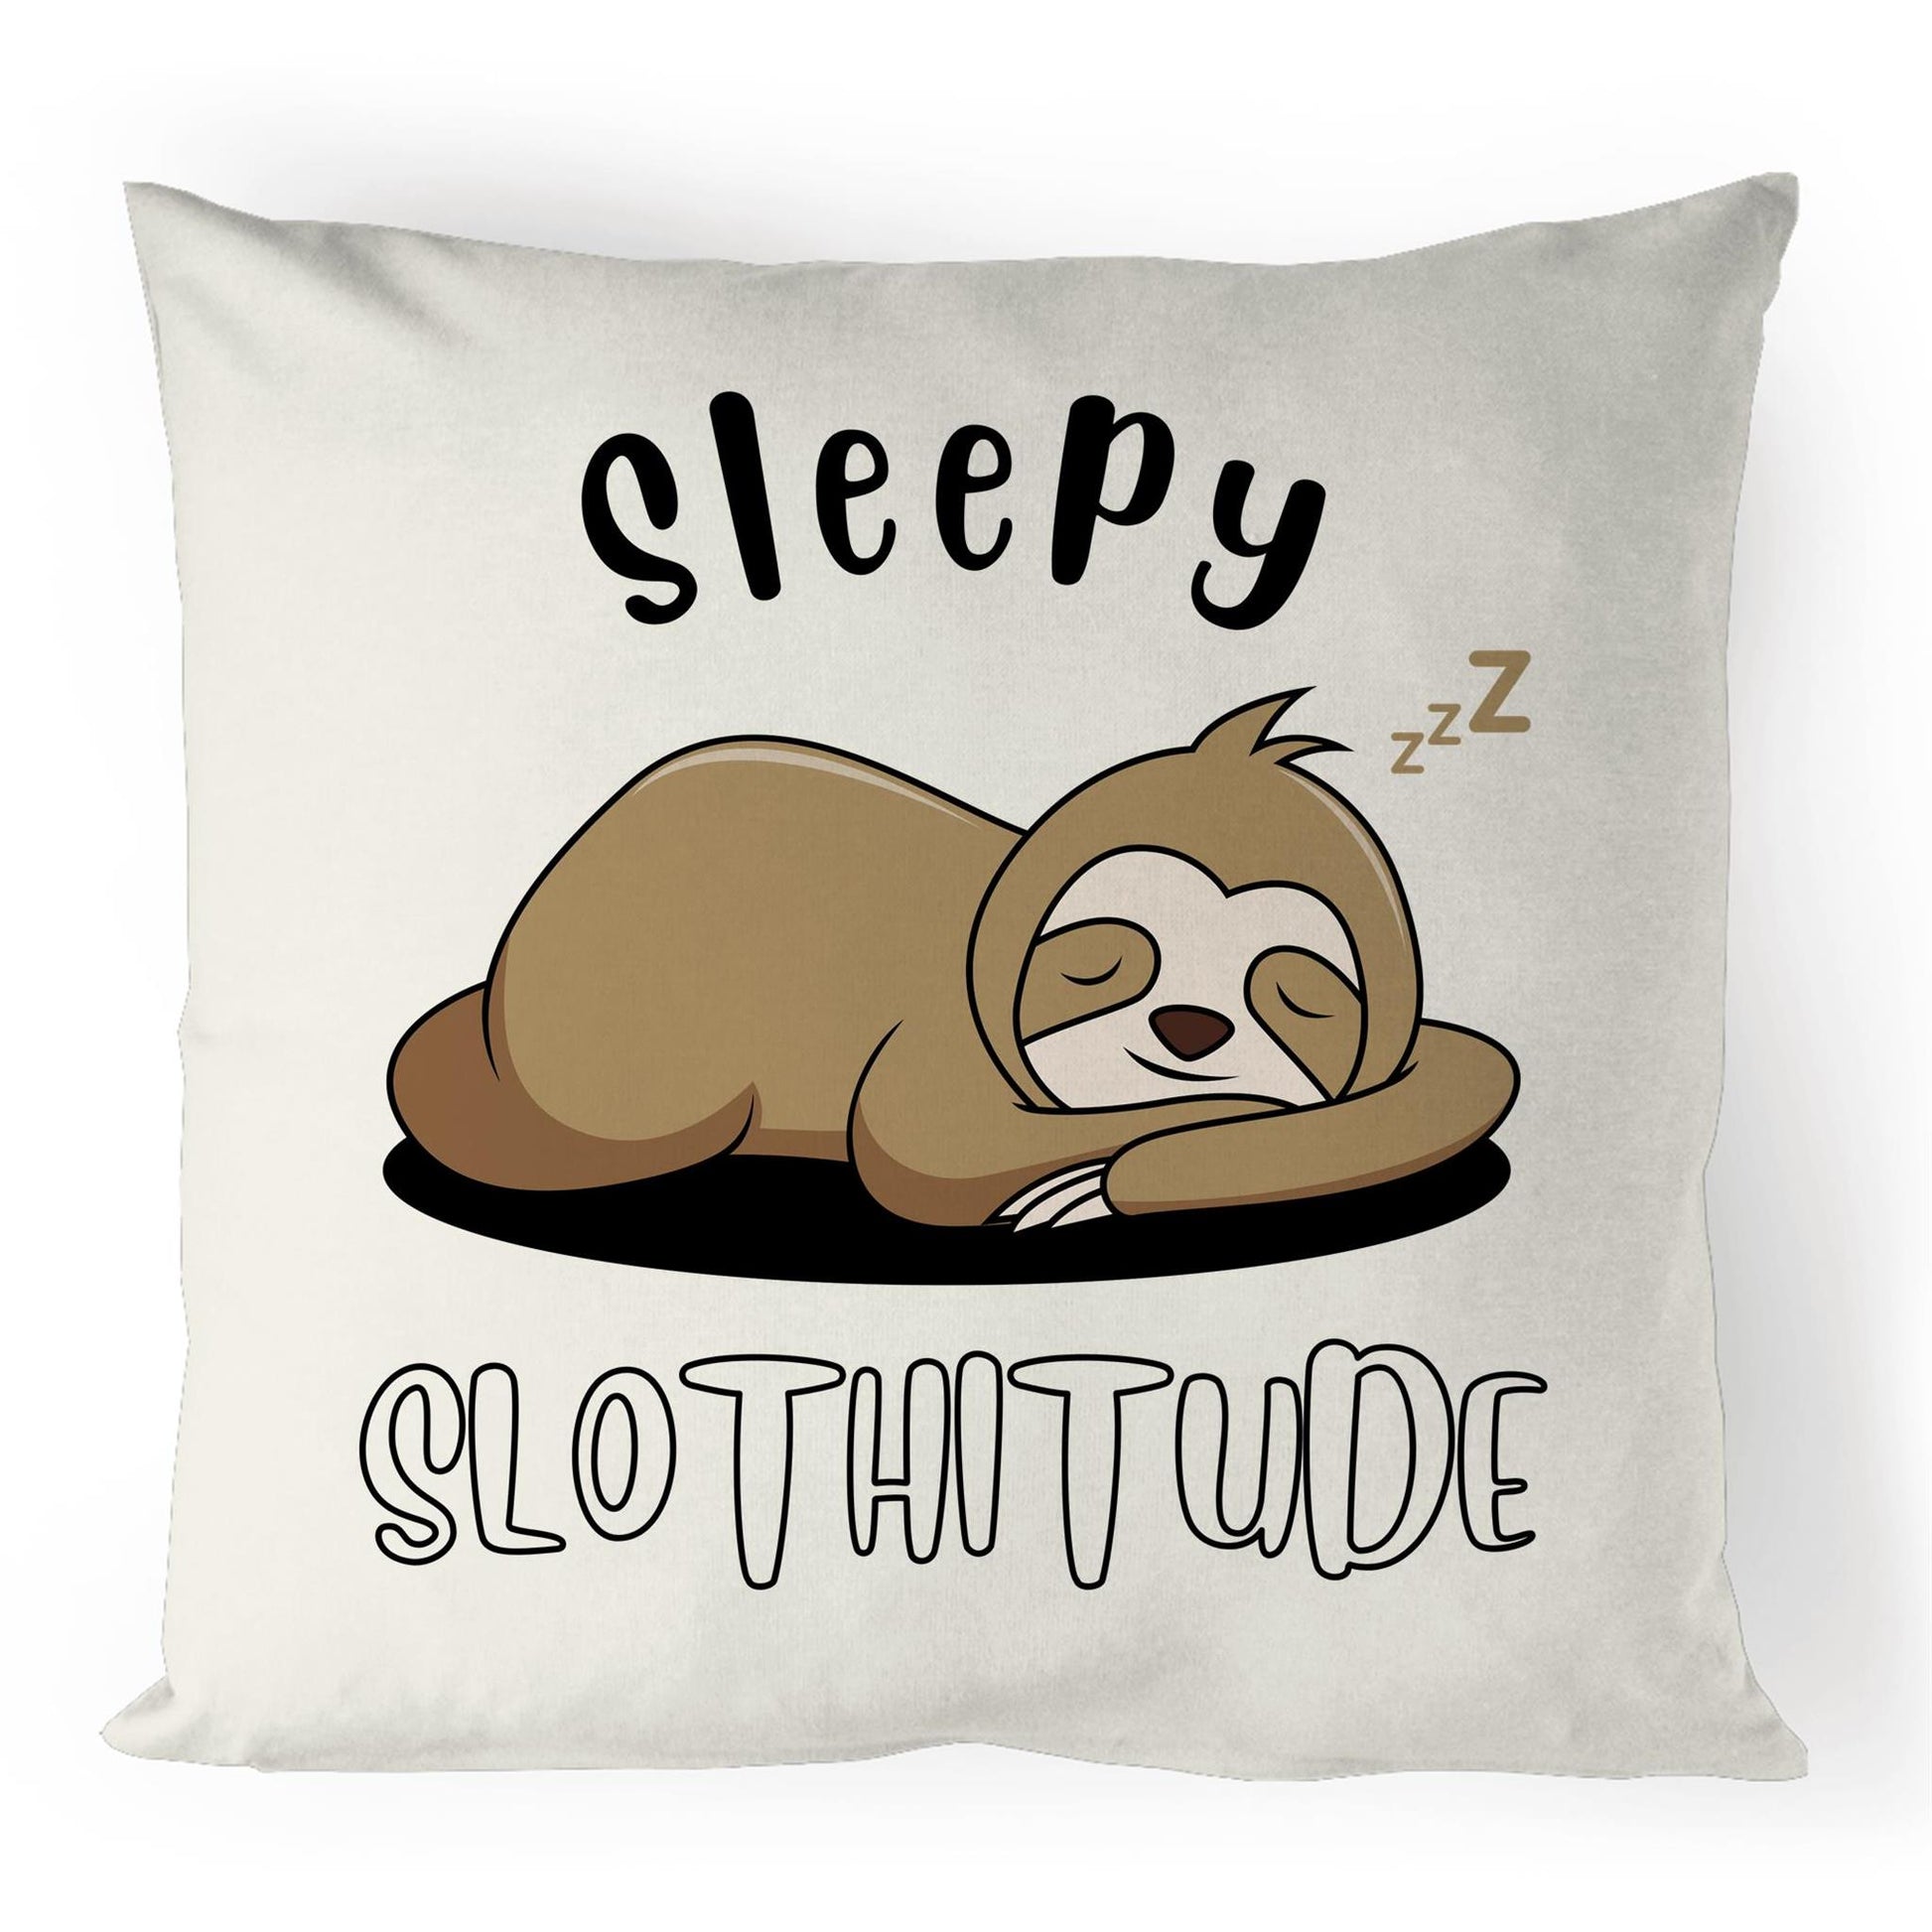 Sleepy Slothitude - 100% Linen Cushion Cover Default Title Linen Cushion Cover